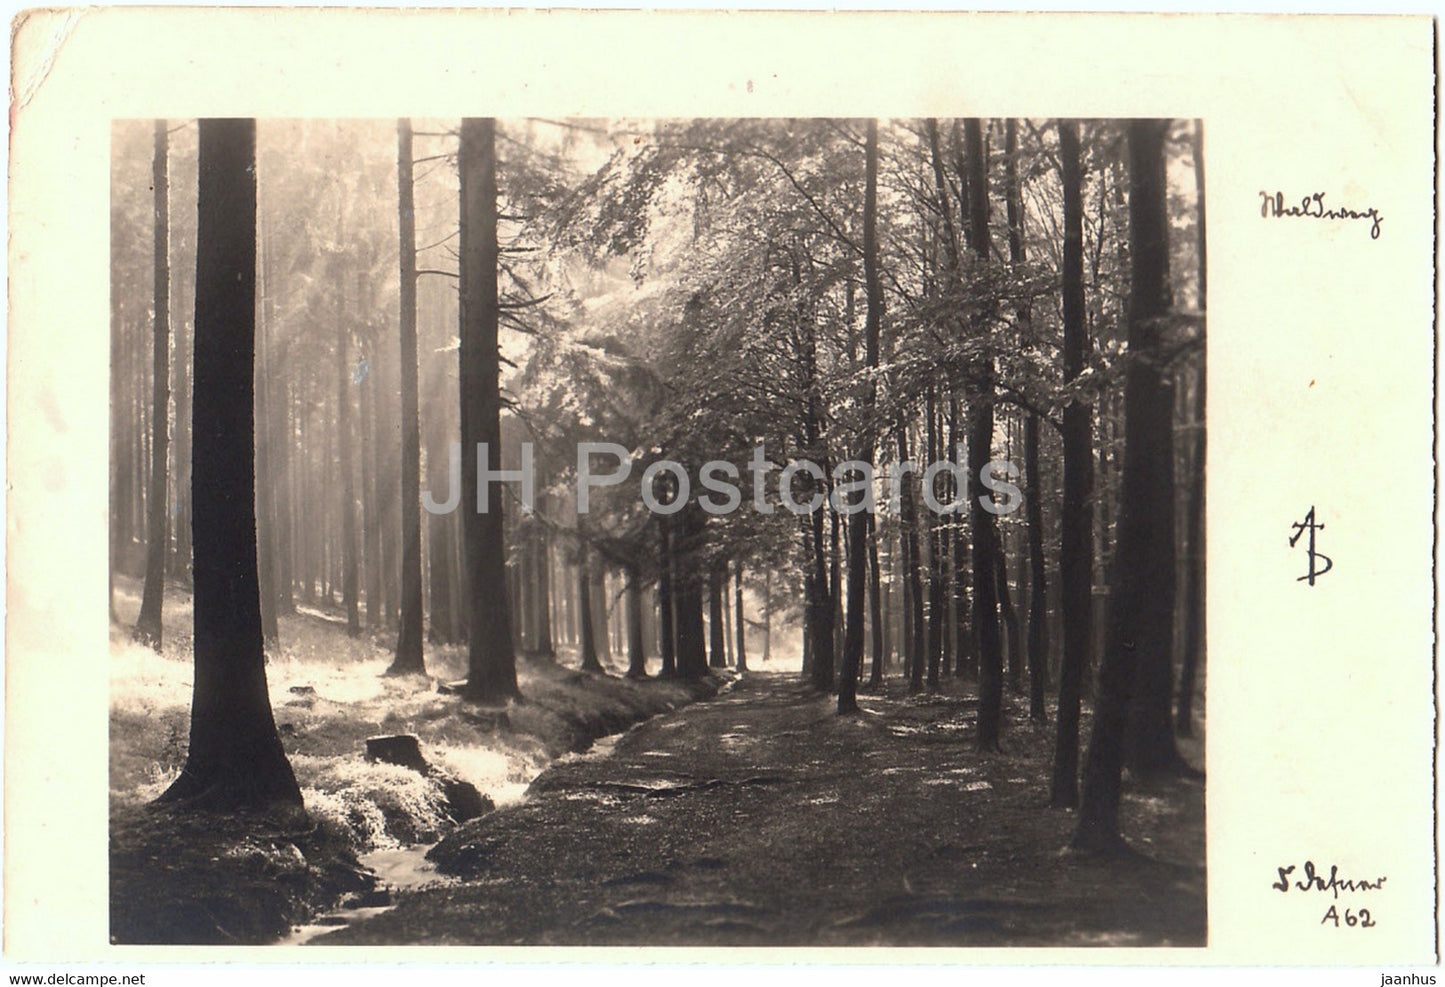 Waldweg - old postcard - 1955 - Germany - used - JH Postcards